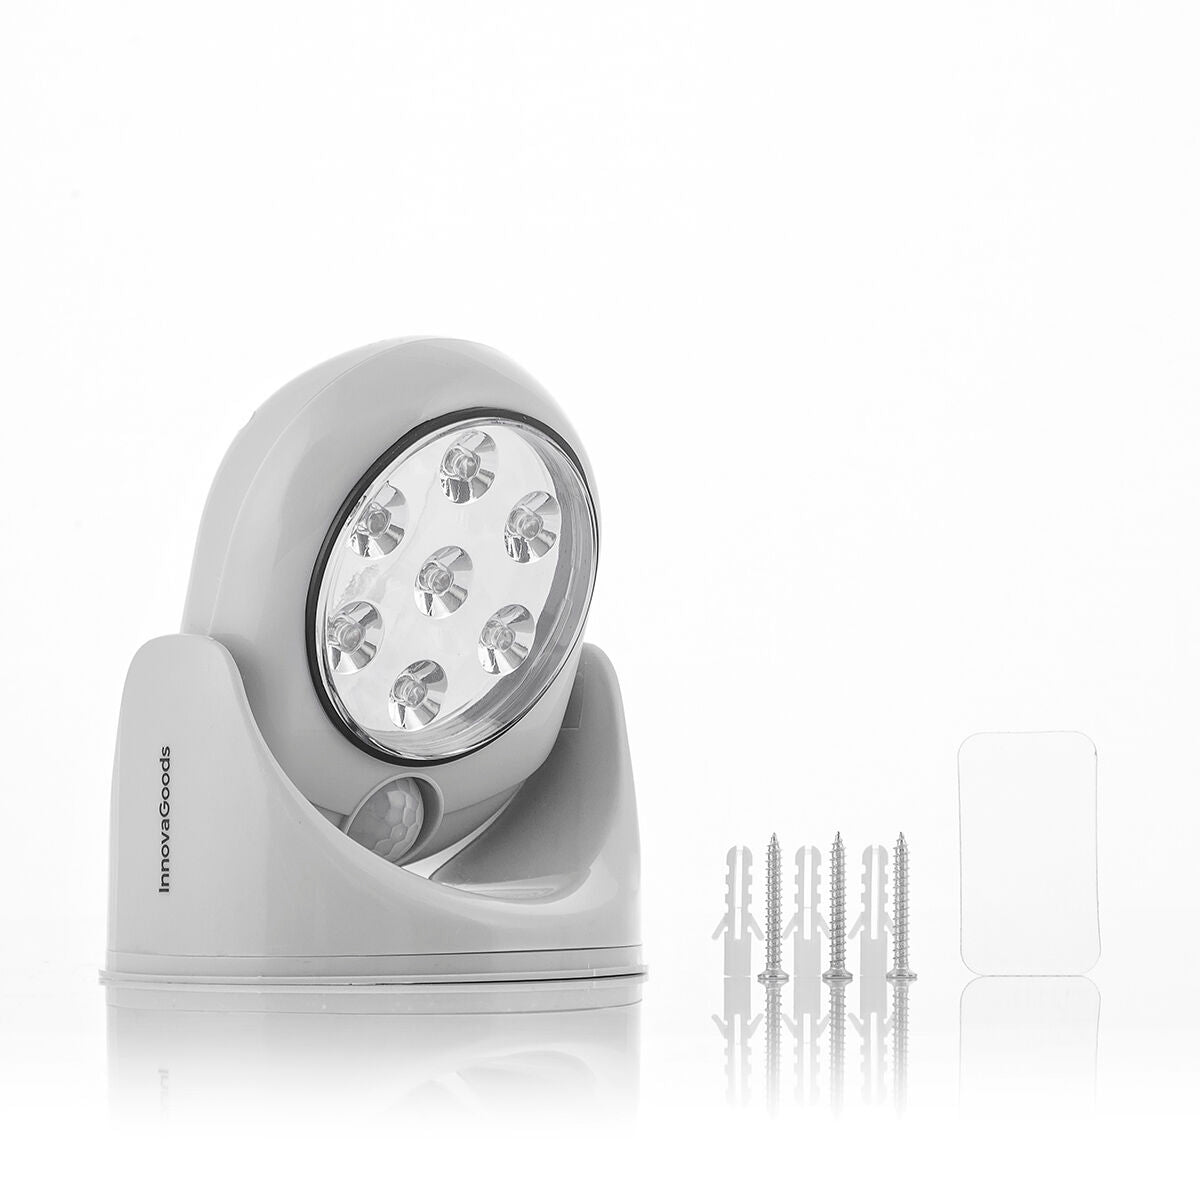 Motion Sensor LED Lamp Lumact 360º InnovaGoods